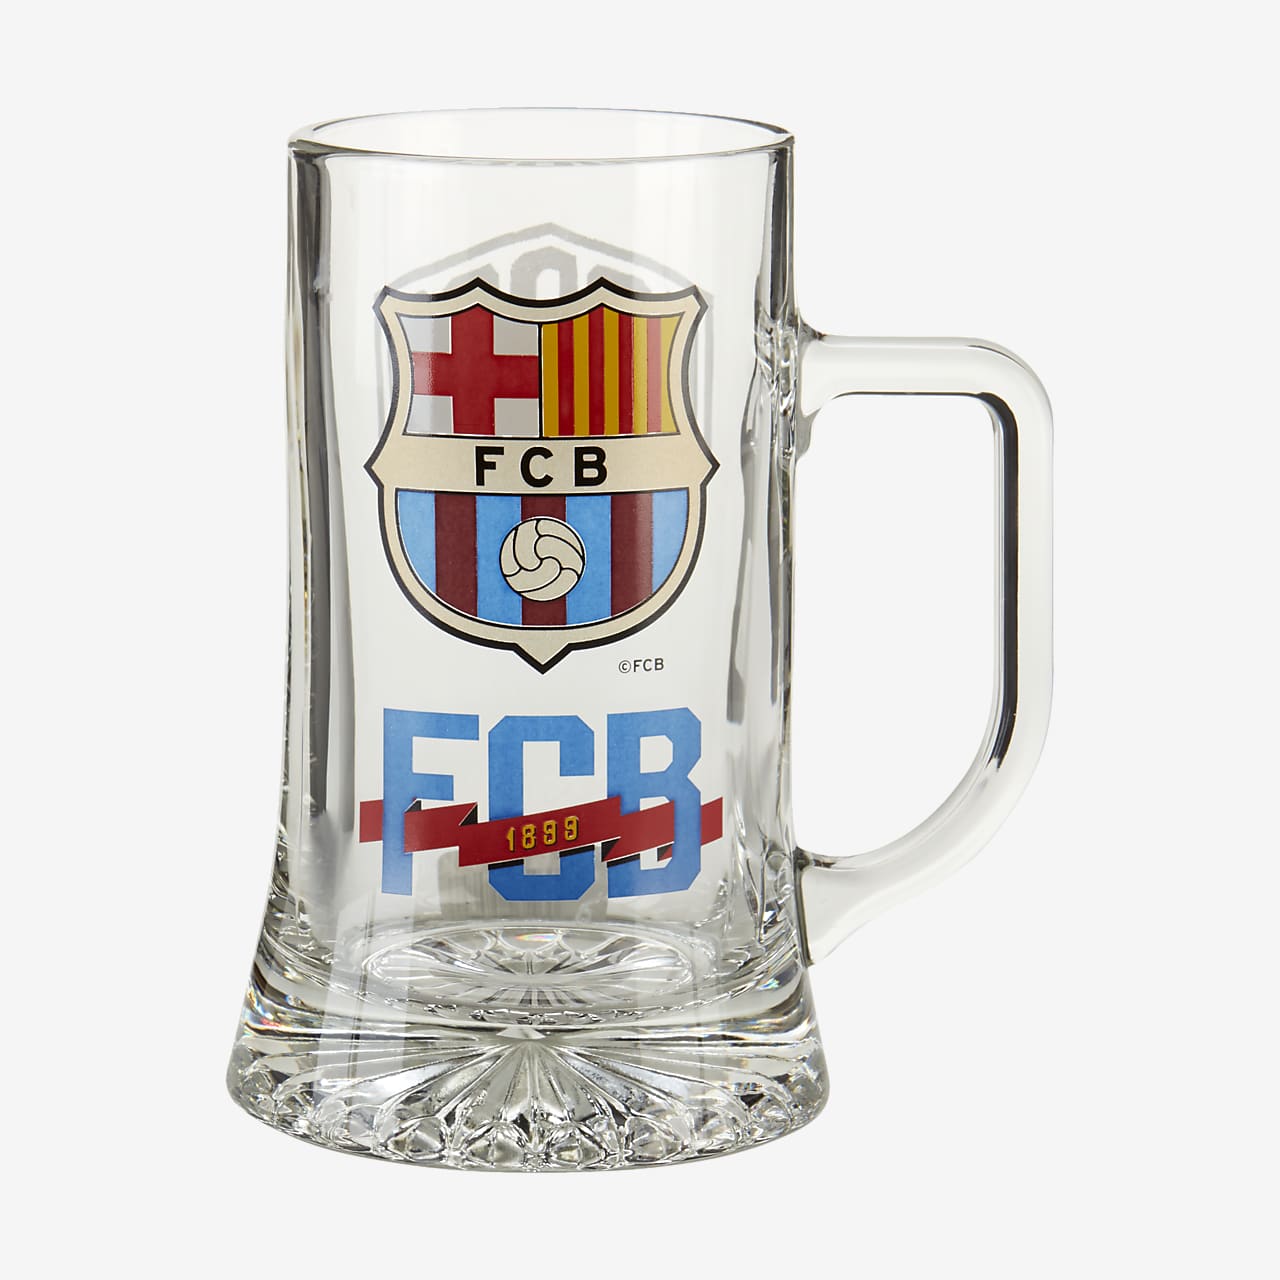 FC Barcelona 1899 Beer Stein